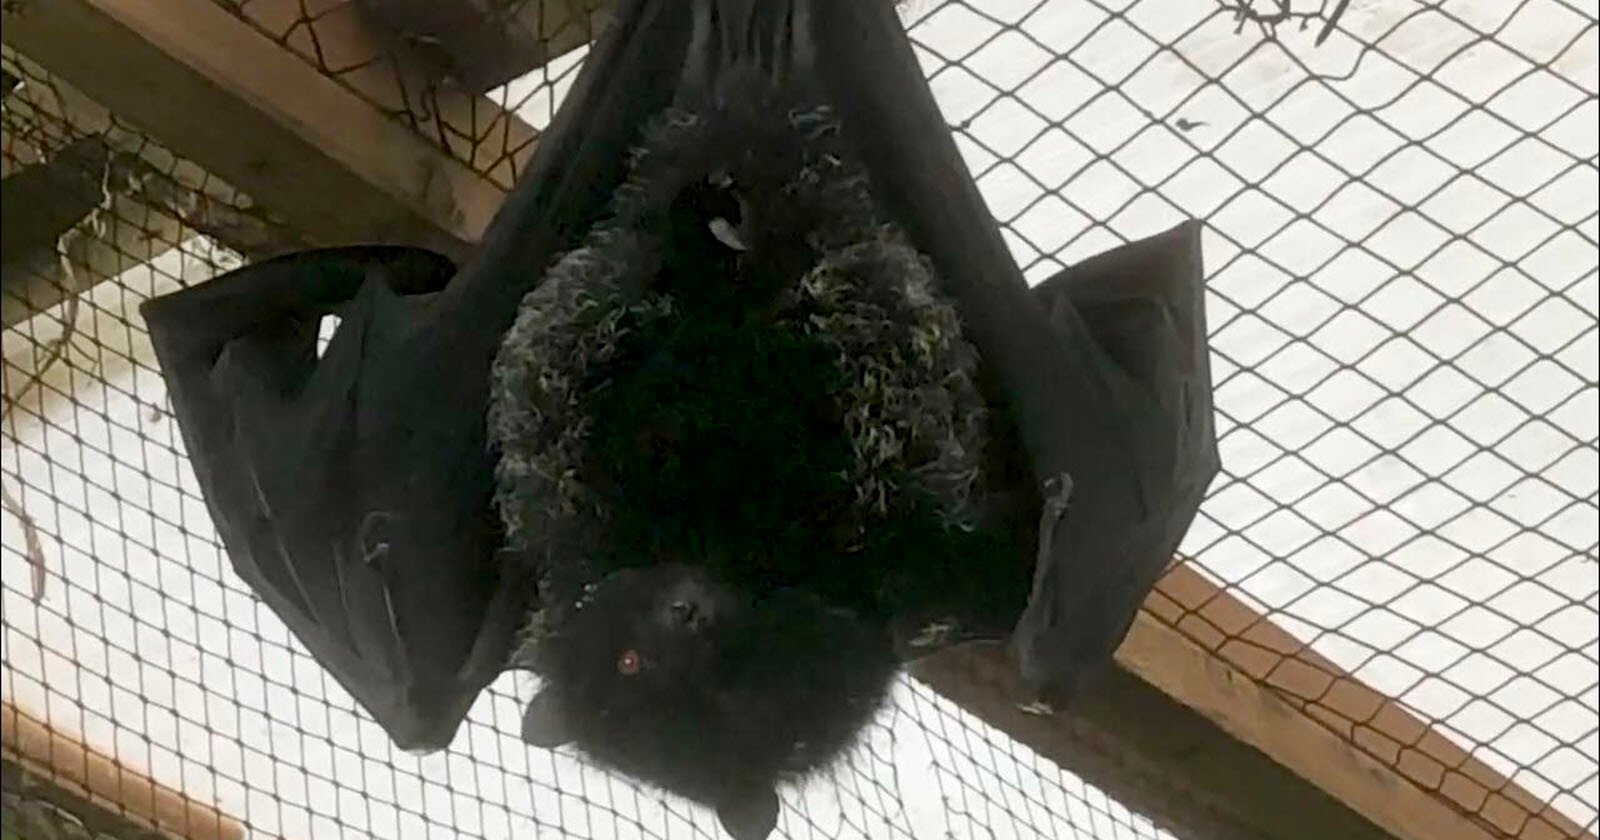  birth world rarest fruit bat captured camera 